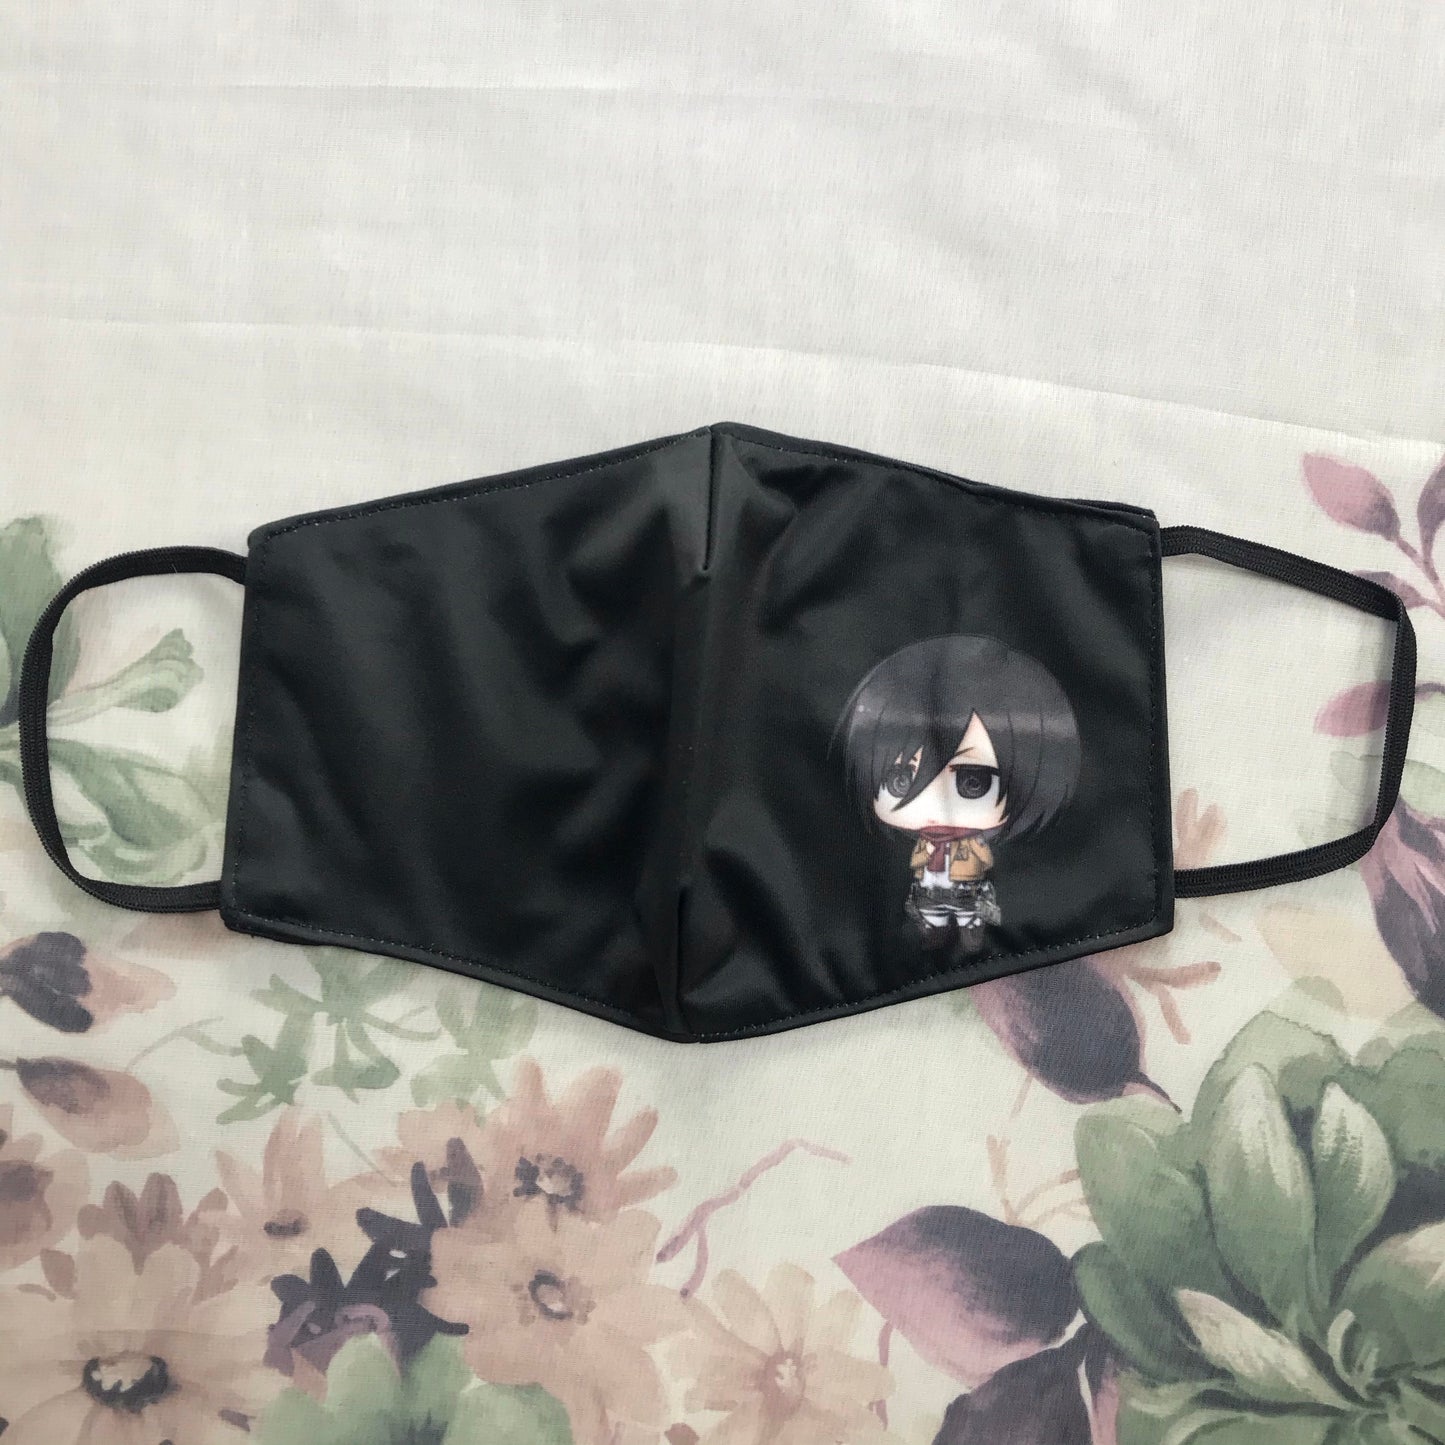 Mikasa face mask